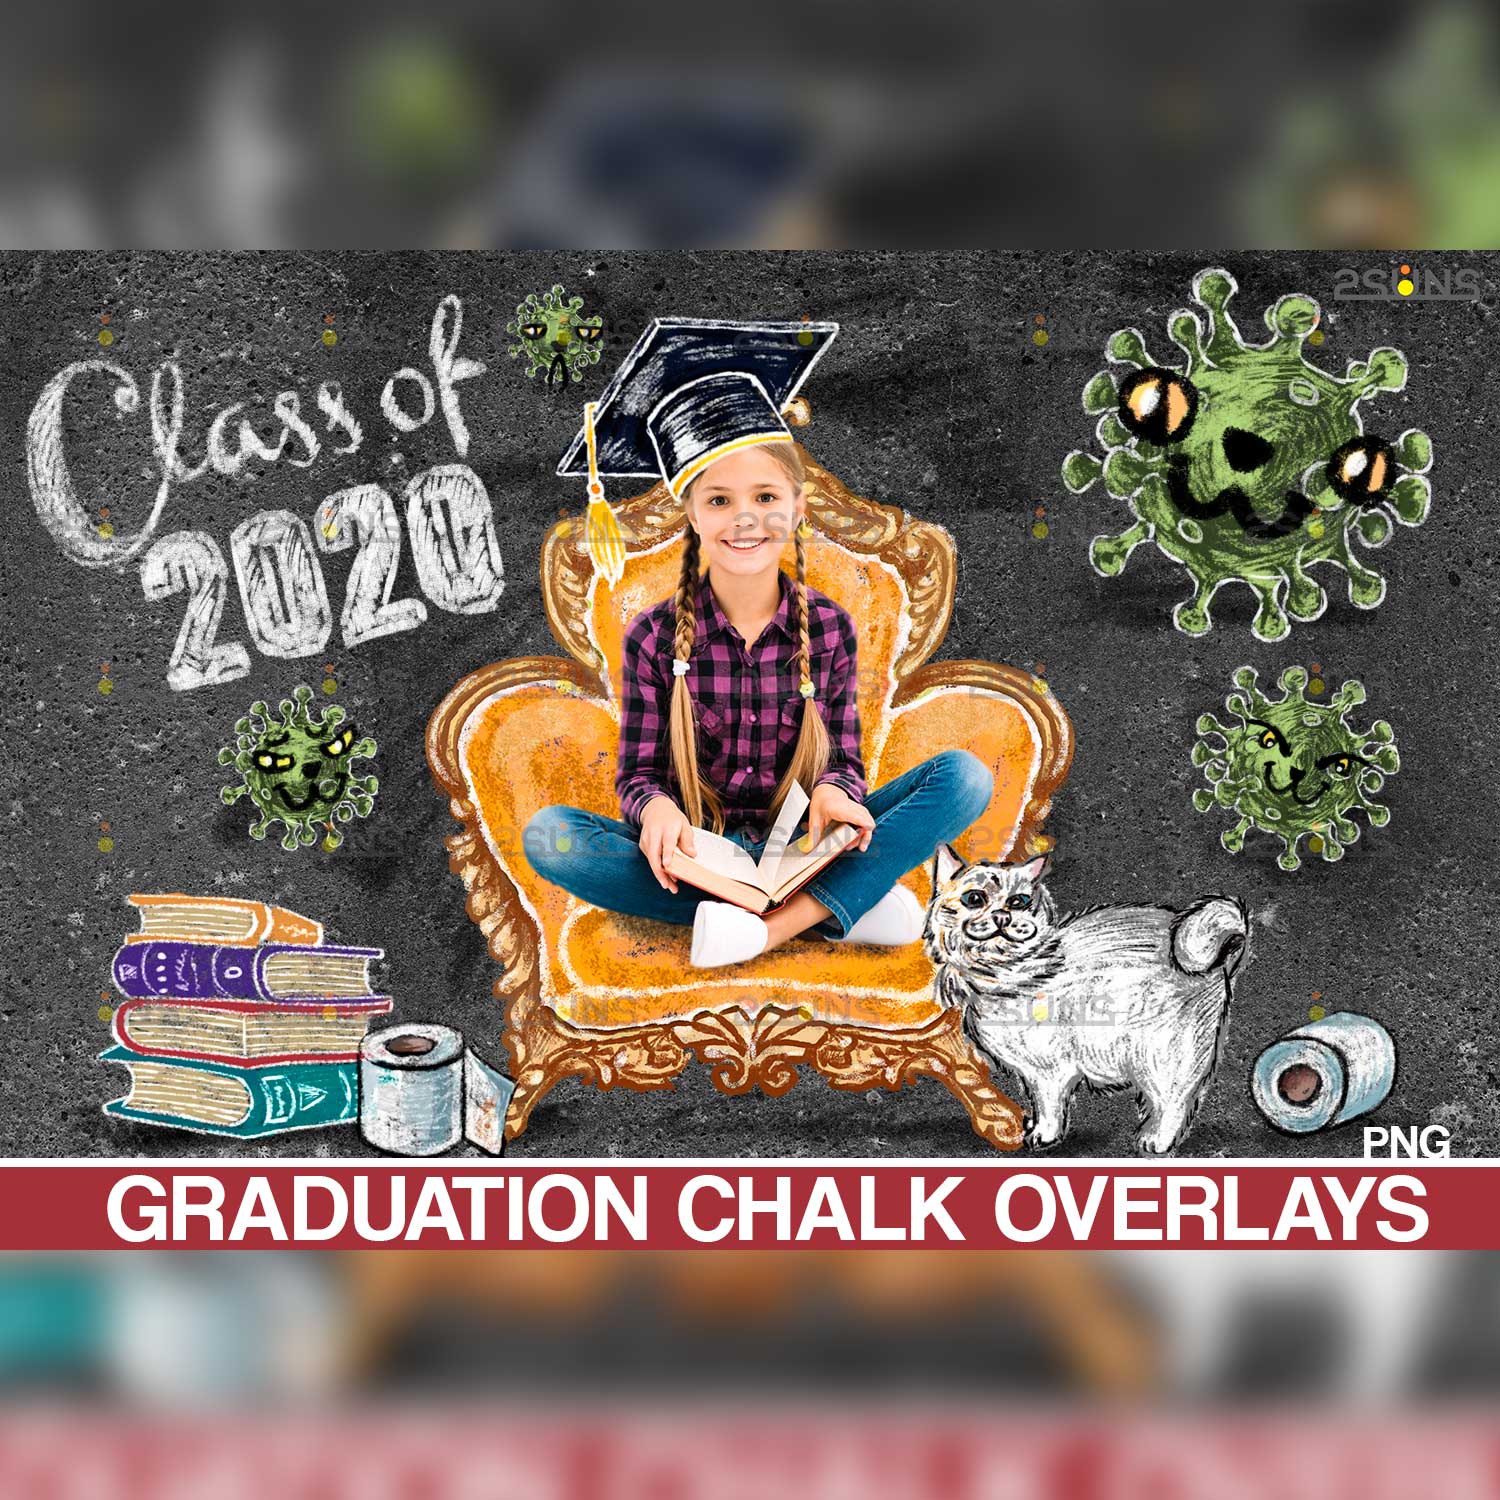 Graduation Sidewalk Chalk Art Overlays 2020 example.